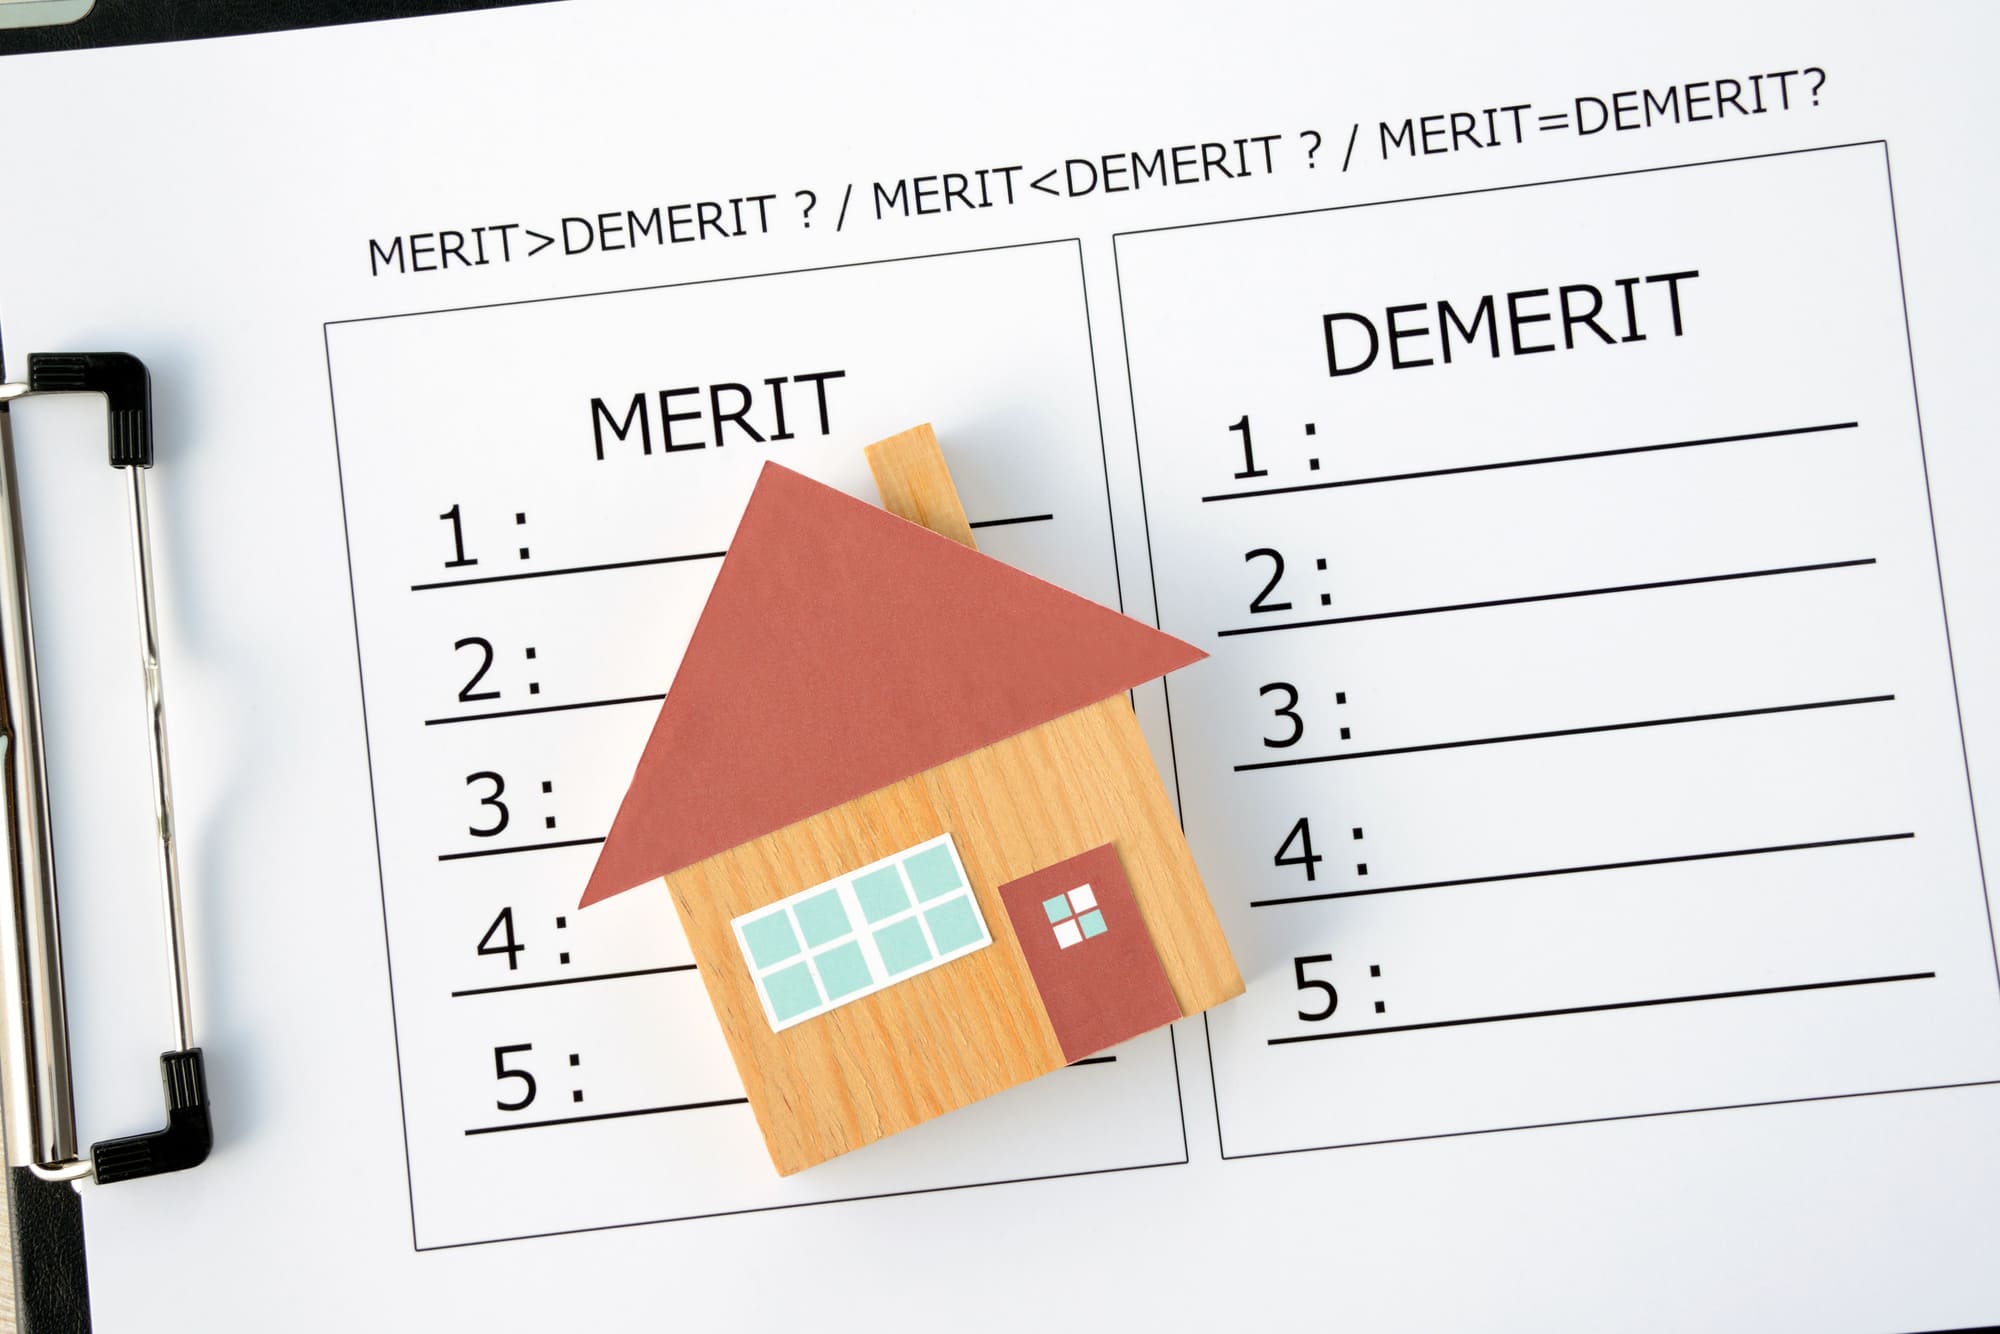 「MERIT」「DEMERIT」の比較が書かれた紙と家の模型